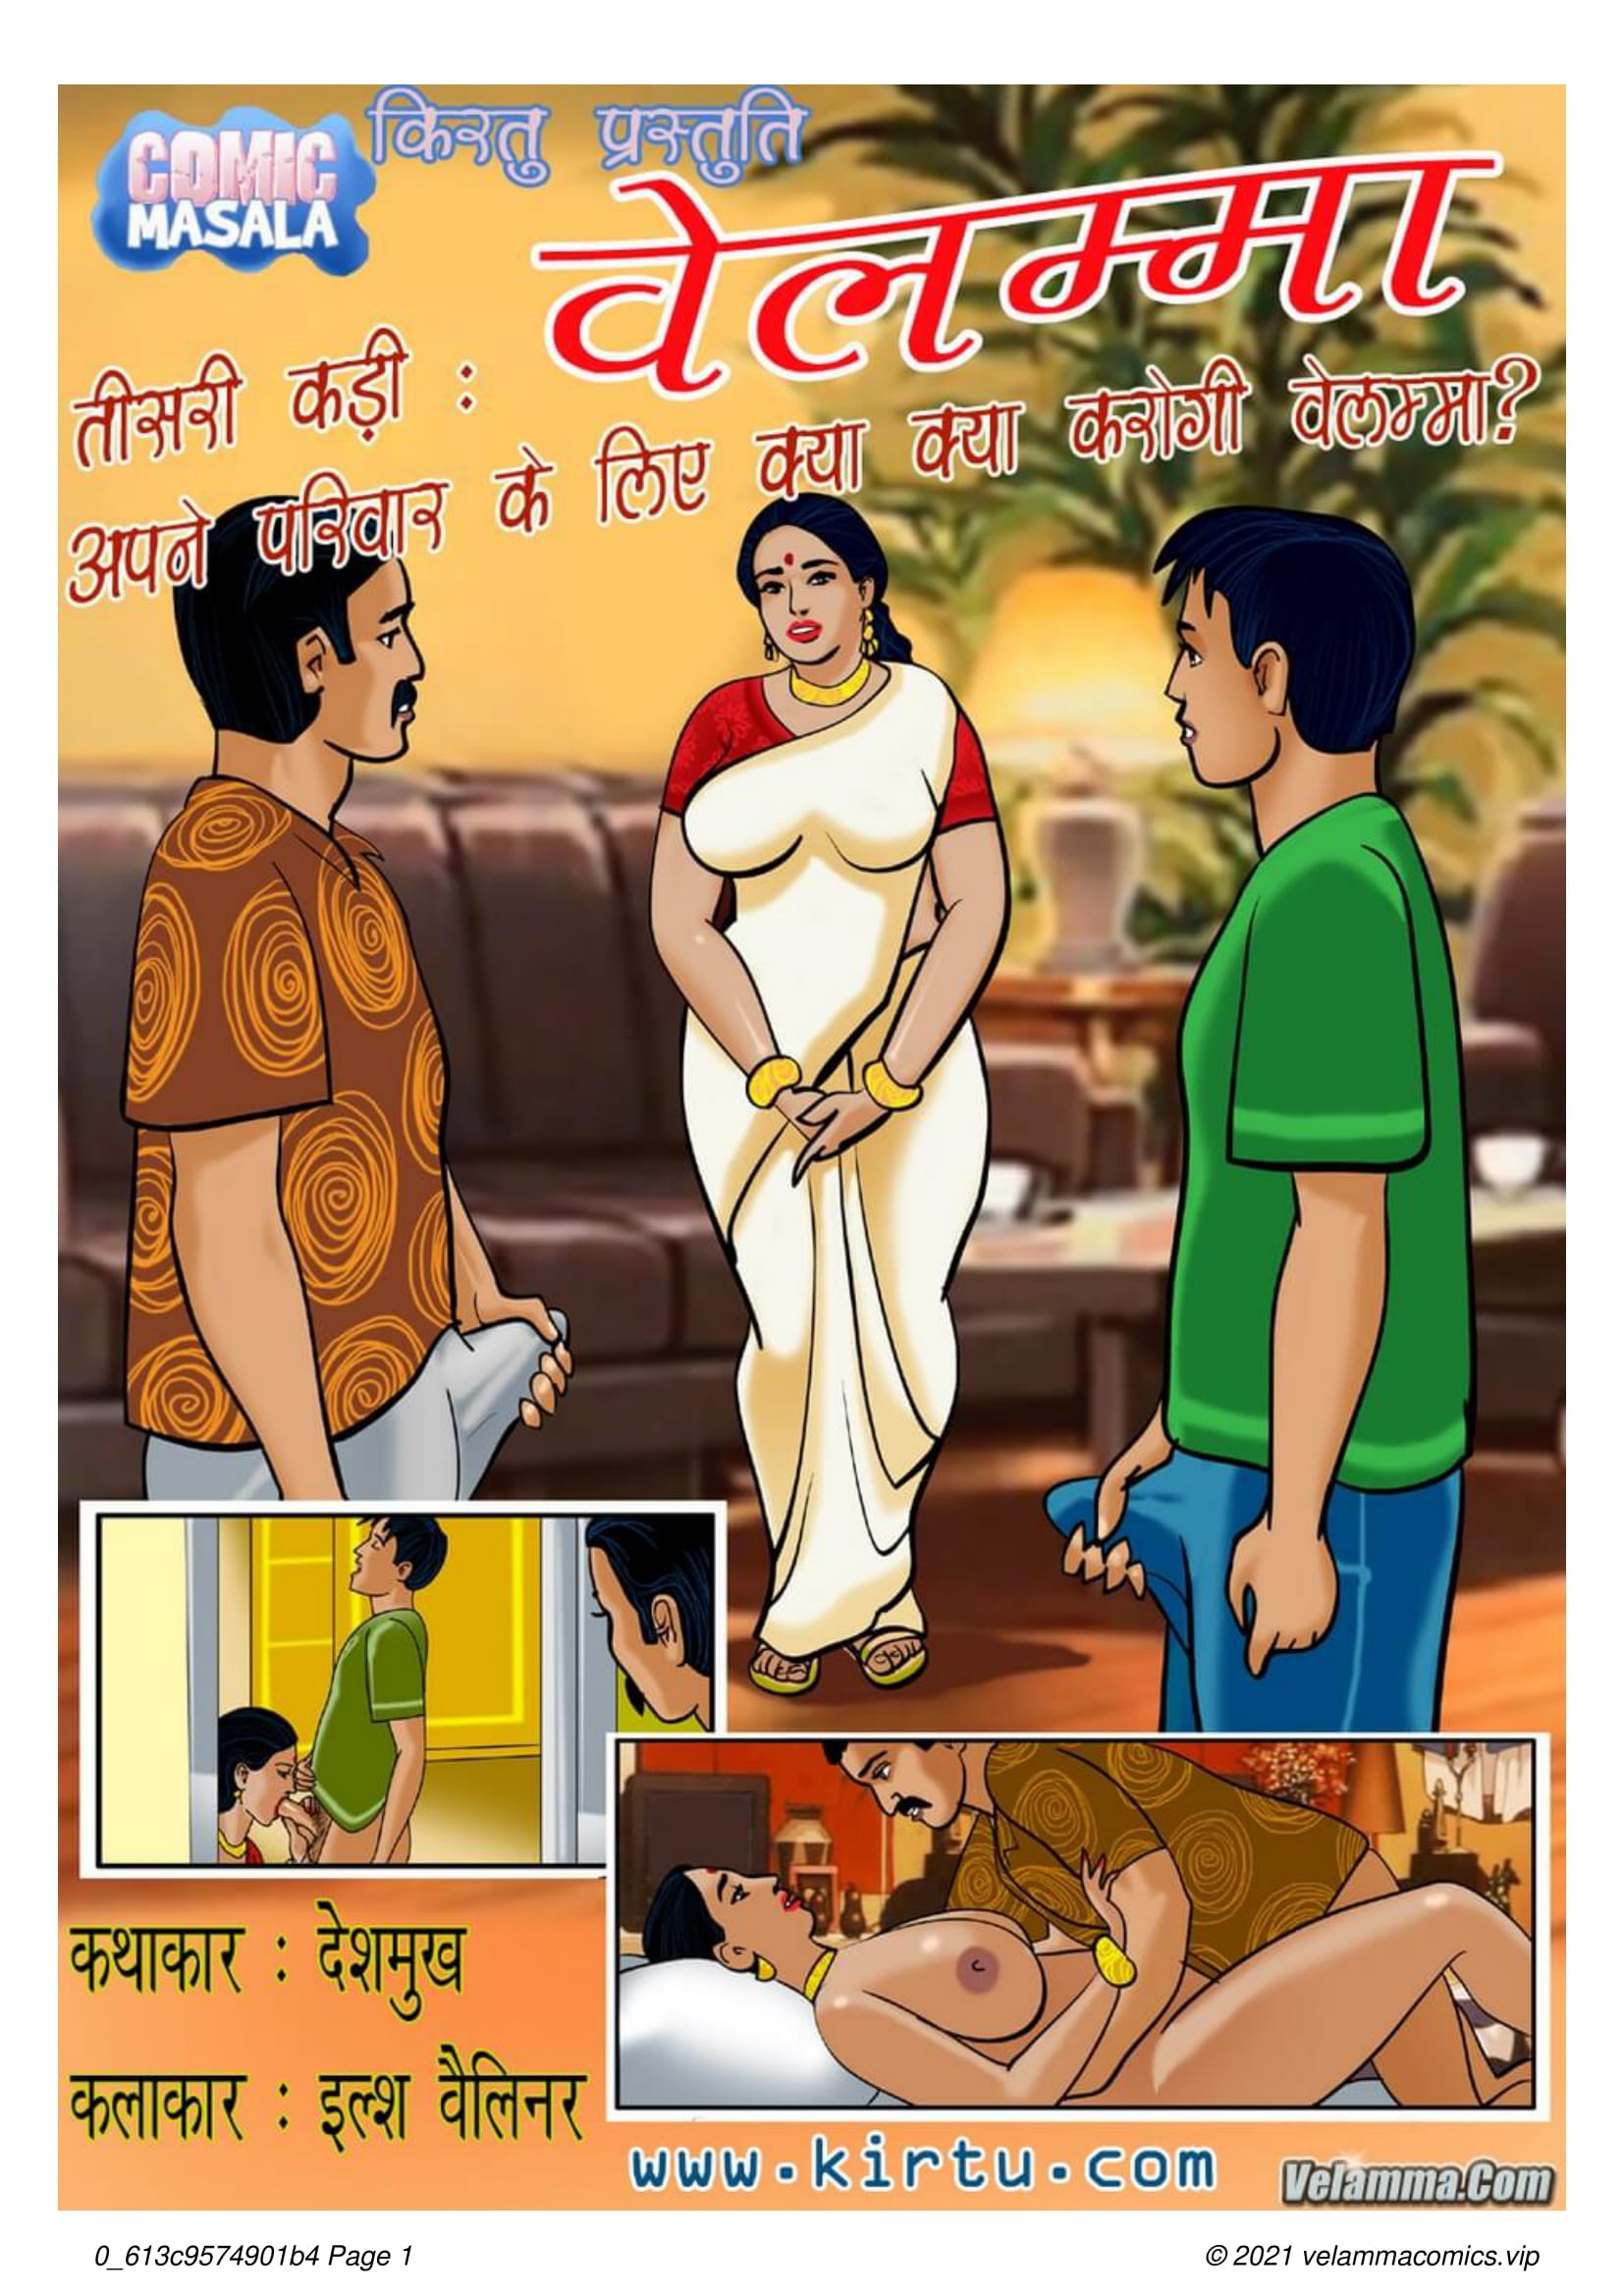 Velamma Episode 03 Hindi – अपने परिवार के लिए क्या क्या करेगी वेलम्मा ? - 59 - Fsicomics